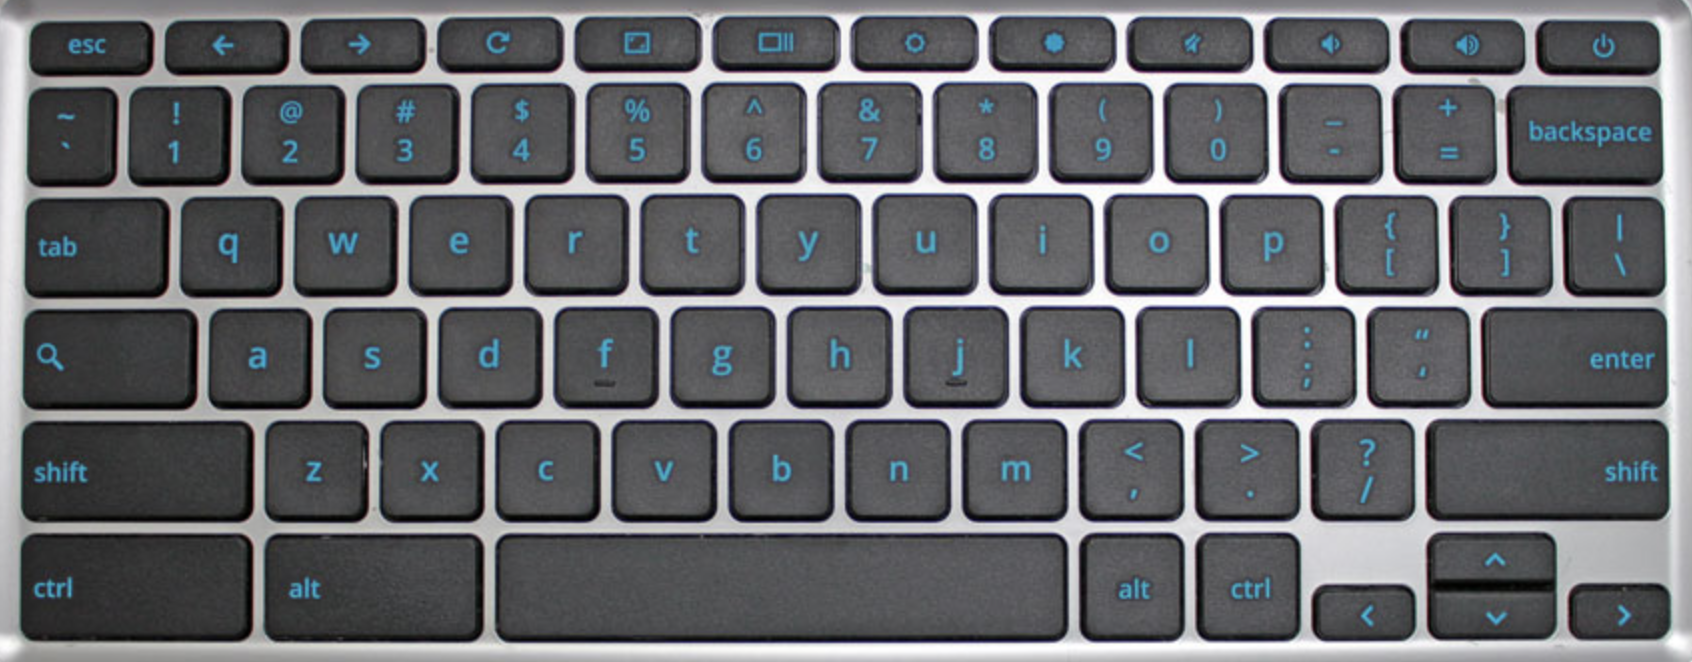 asus-C202SA-keyboard-keys-replacement.jpg